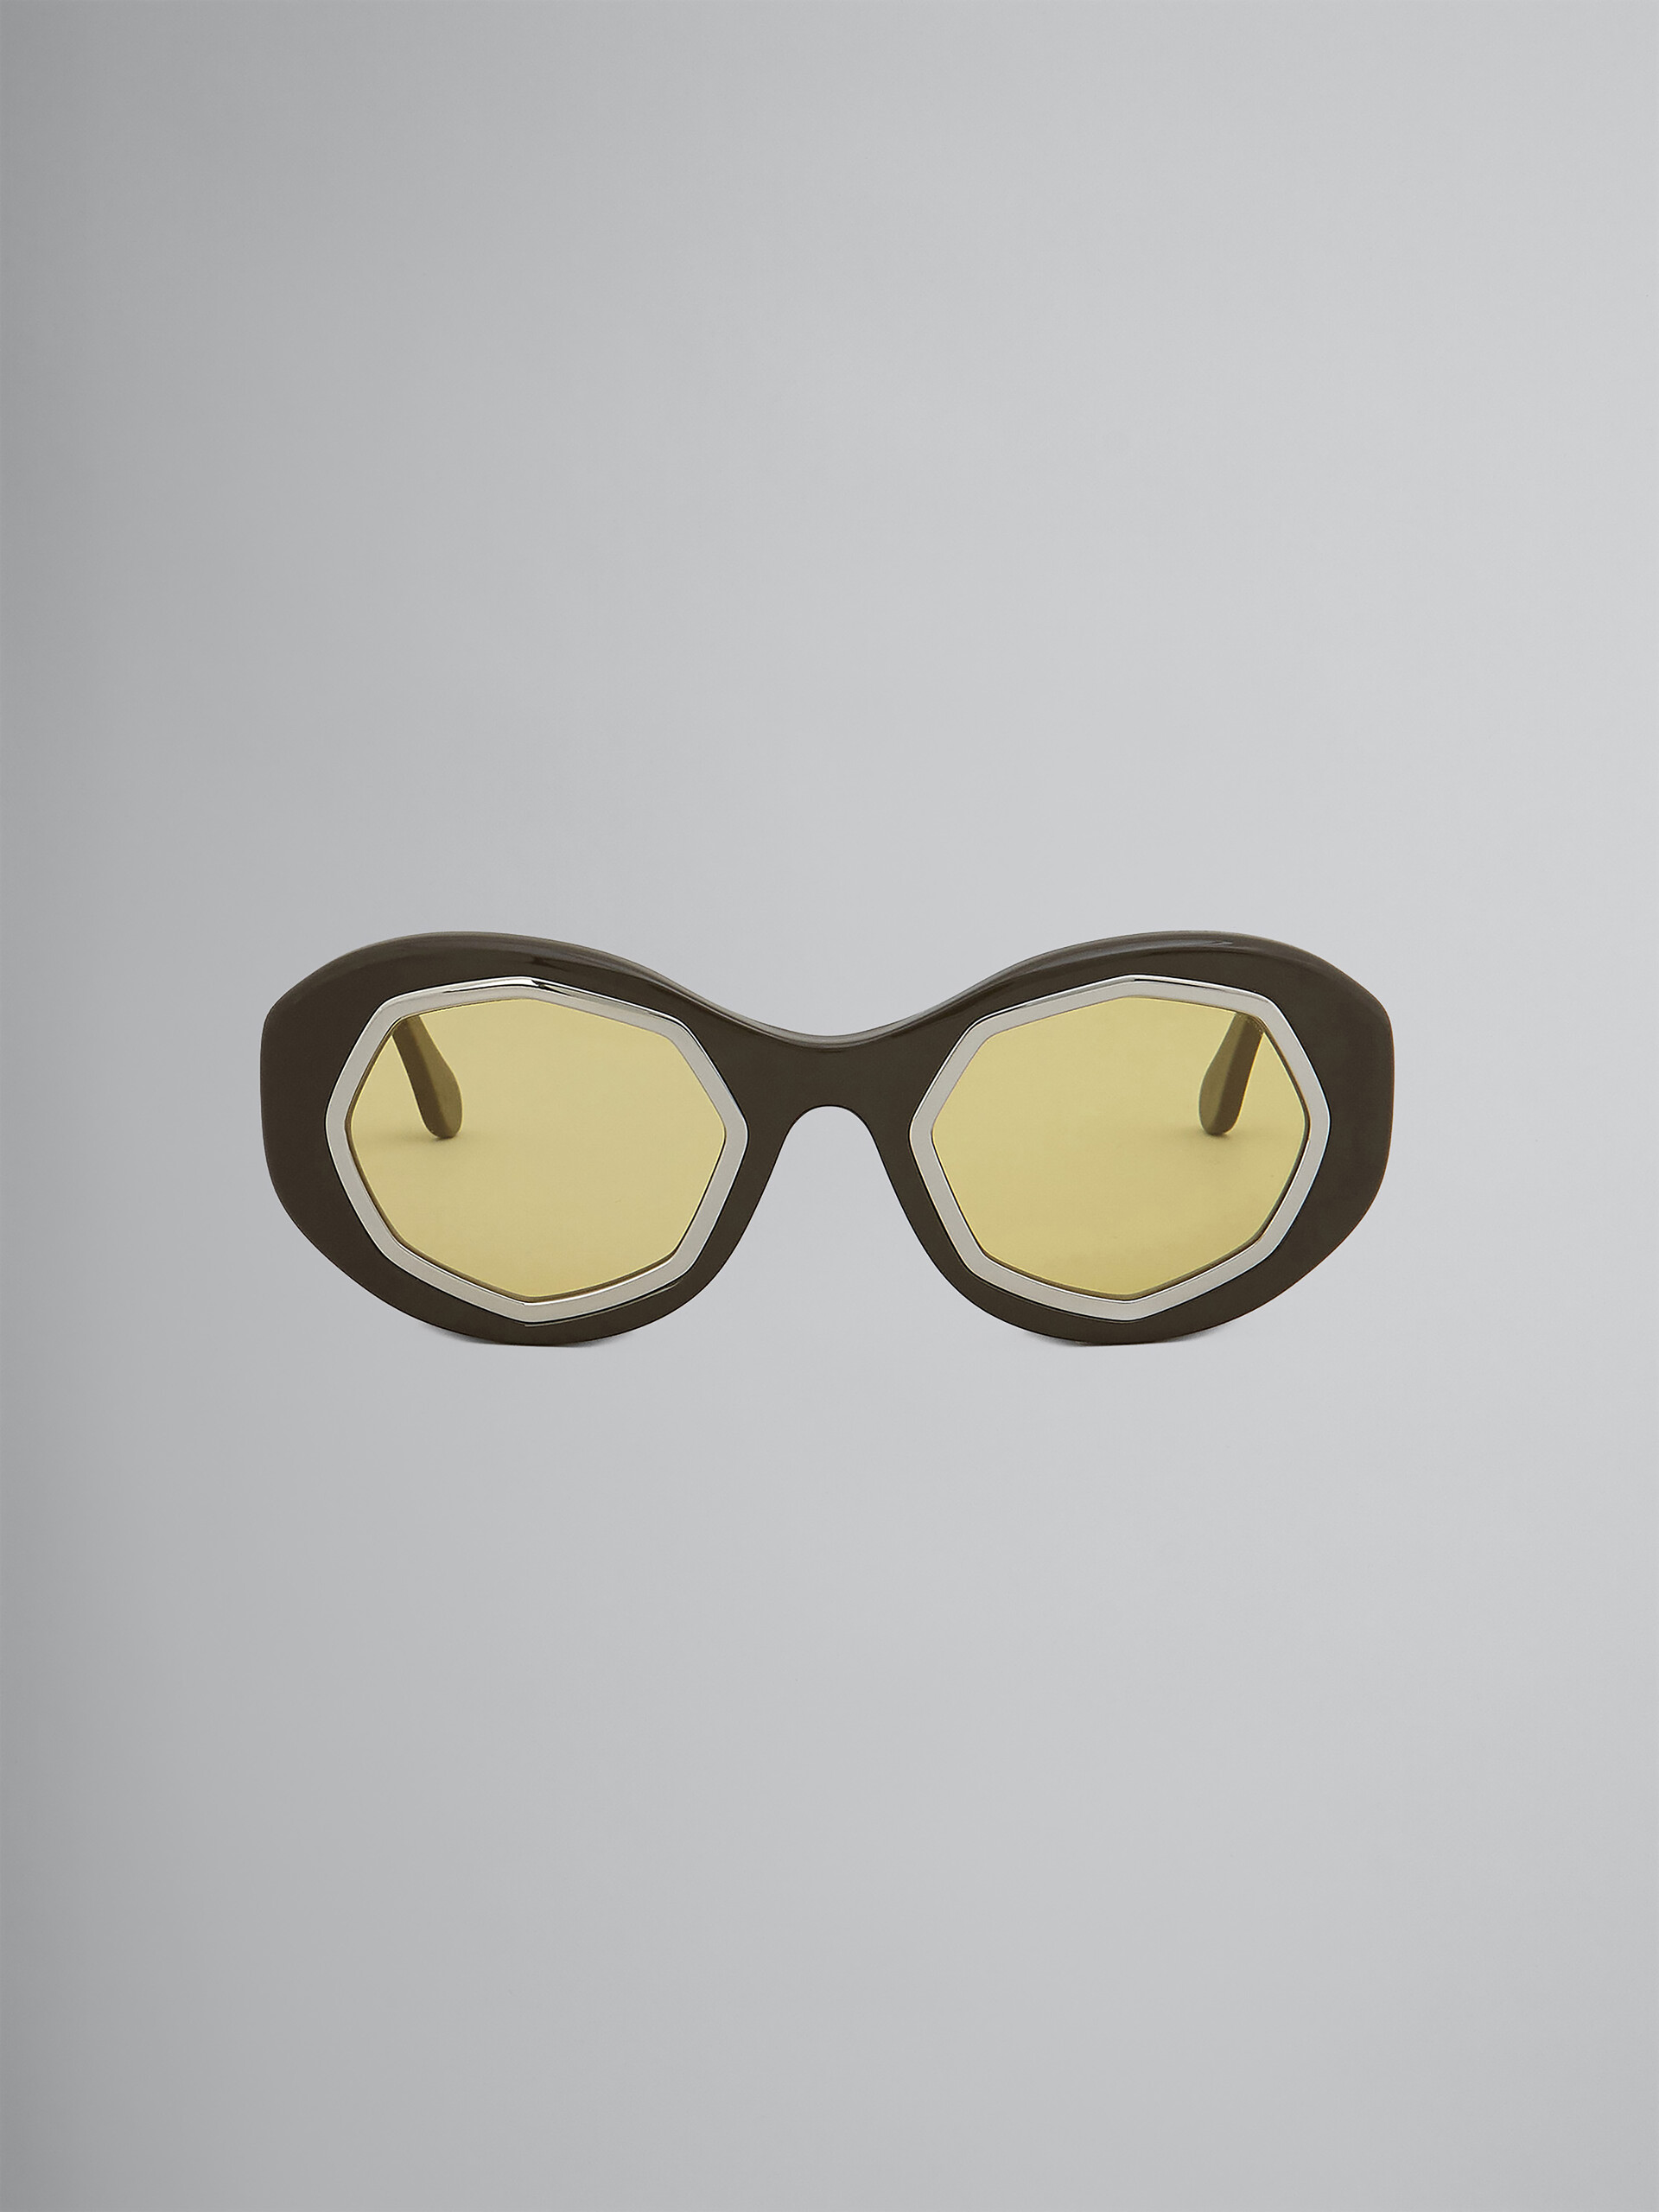 Brown MOUNT BRUMO acetate sunglasses - Optical - Image 1